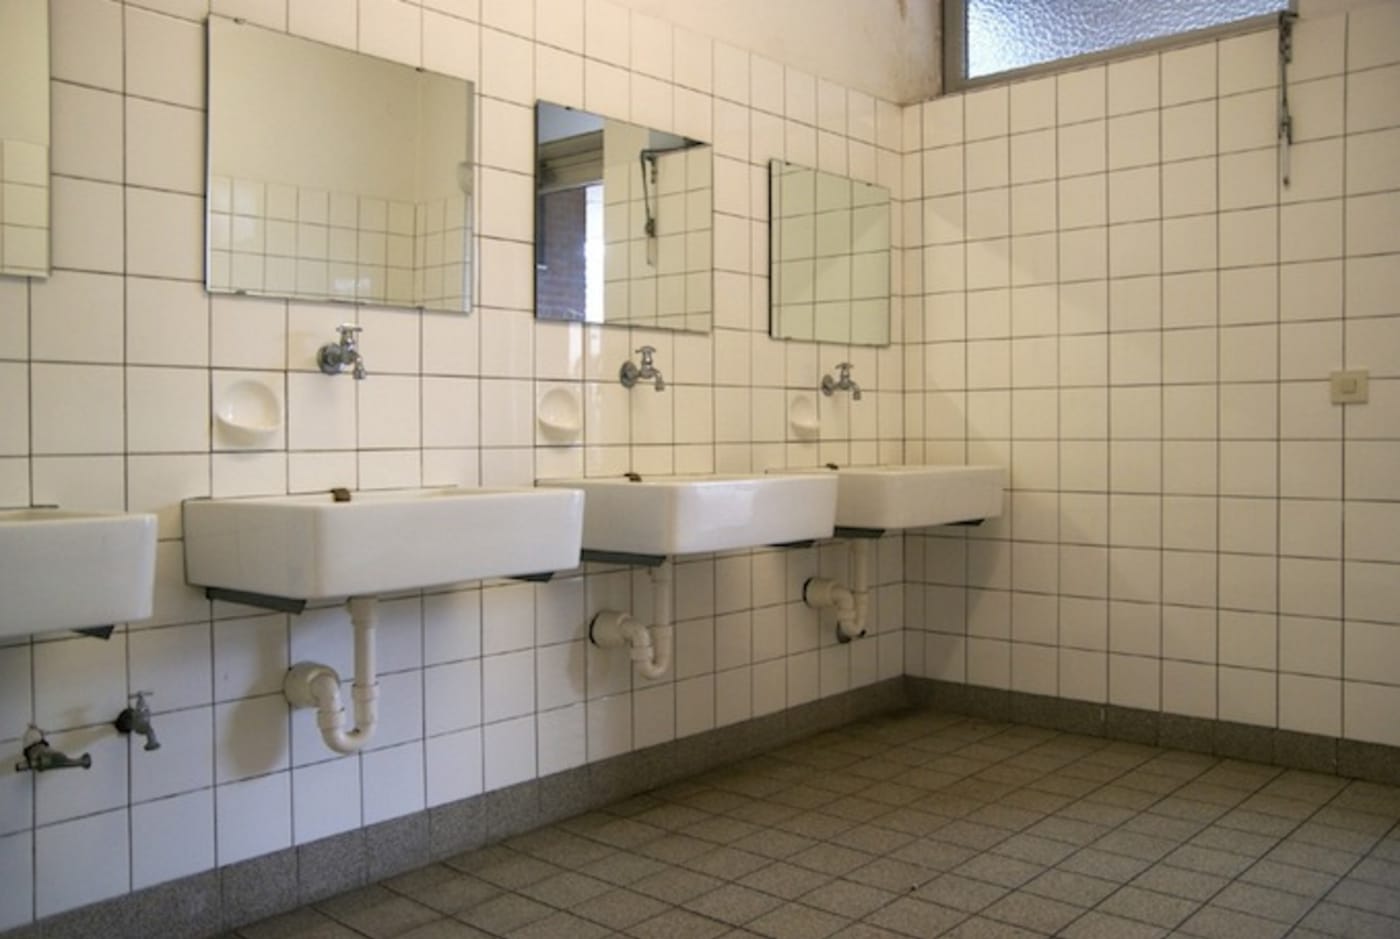 School Toilet - Former Teacher Confesses to Making Child-Porn Music Video With Secret  Bathroom Cameras | Complex